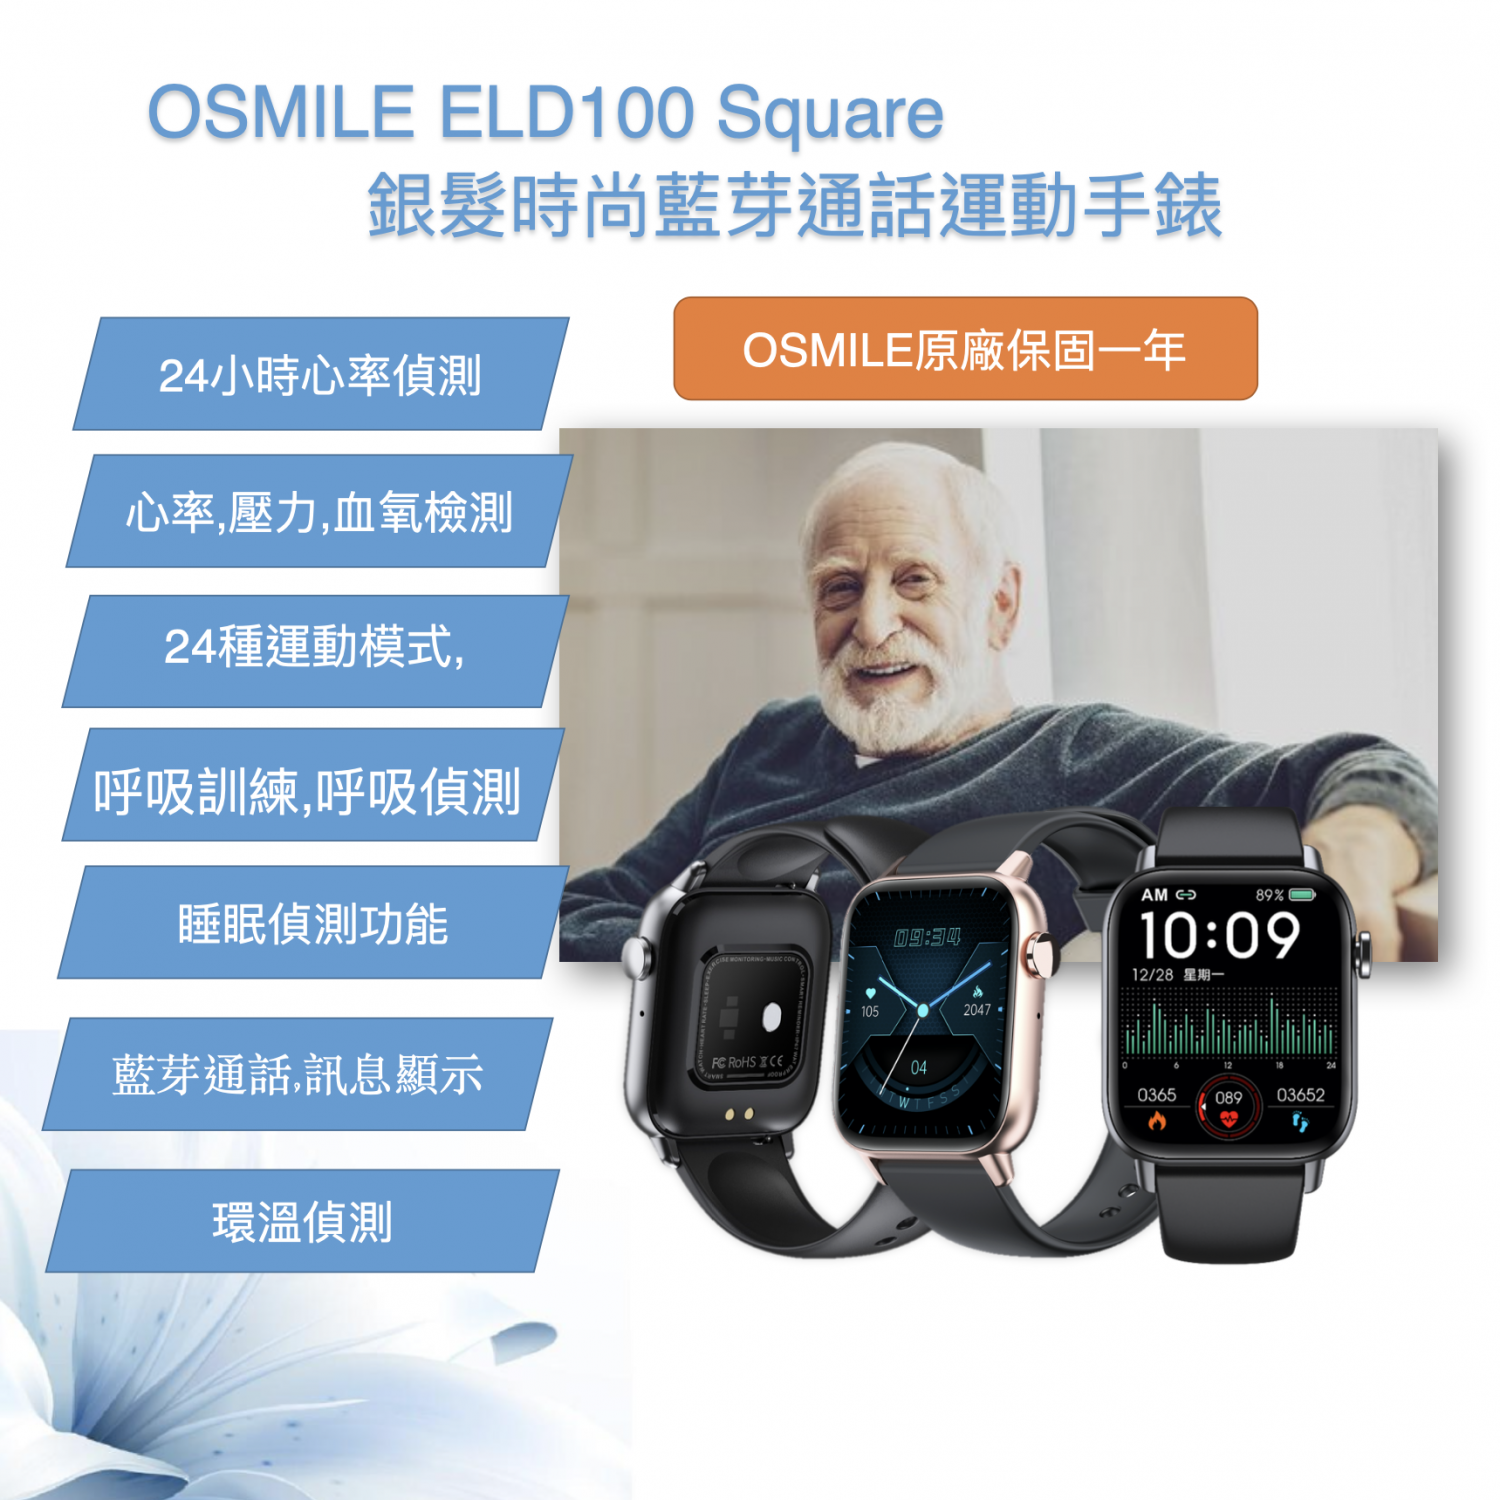 Osmile ELD100 Square 心率/壓力/血氧/呼吸 藍芽通話健康管理手錶